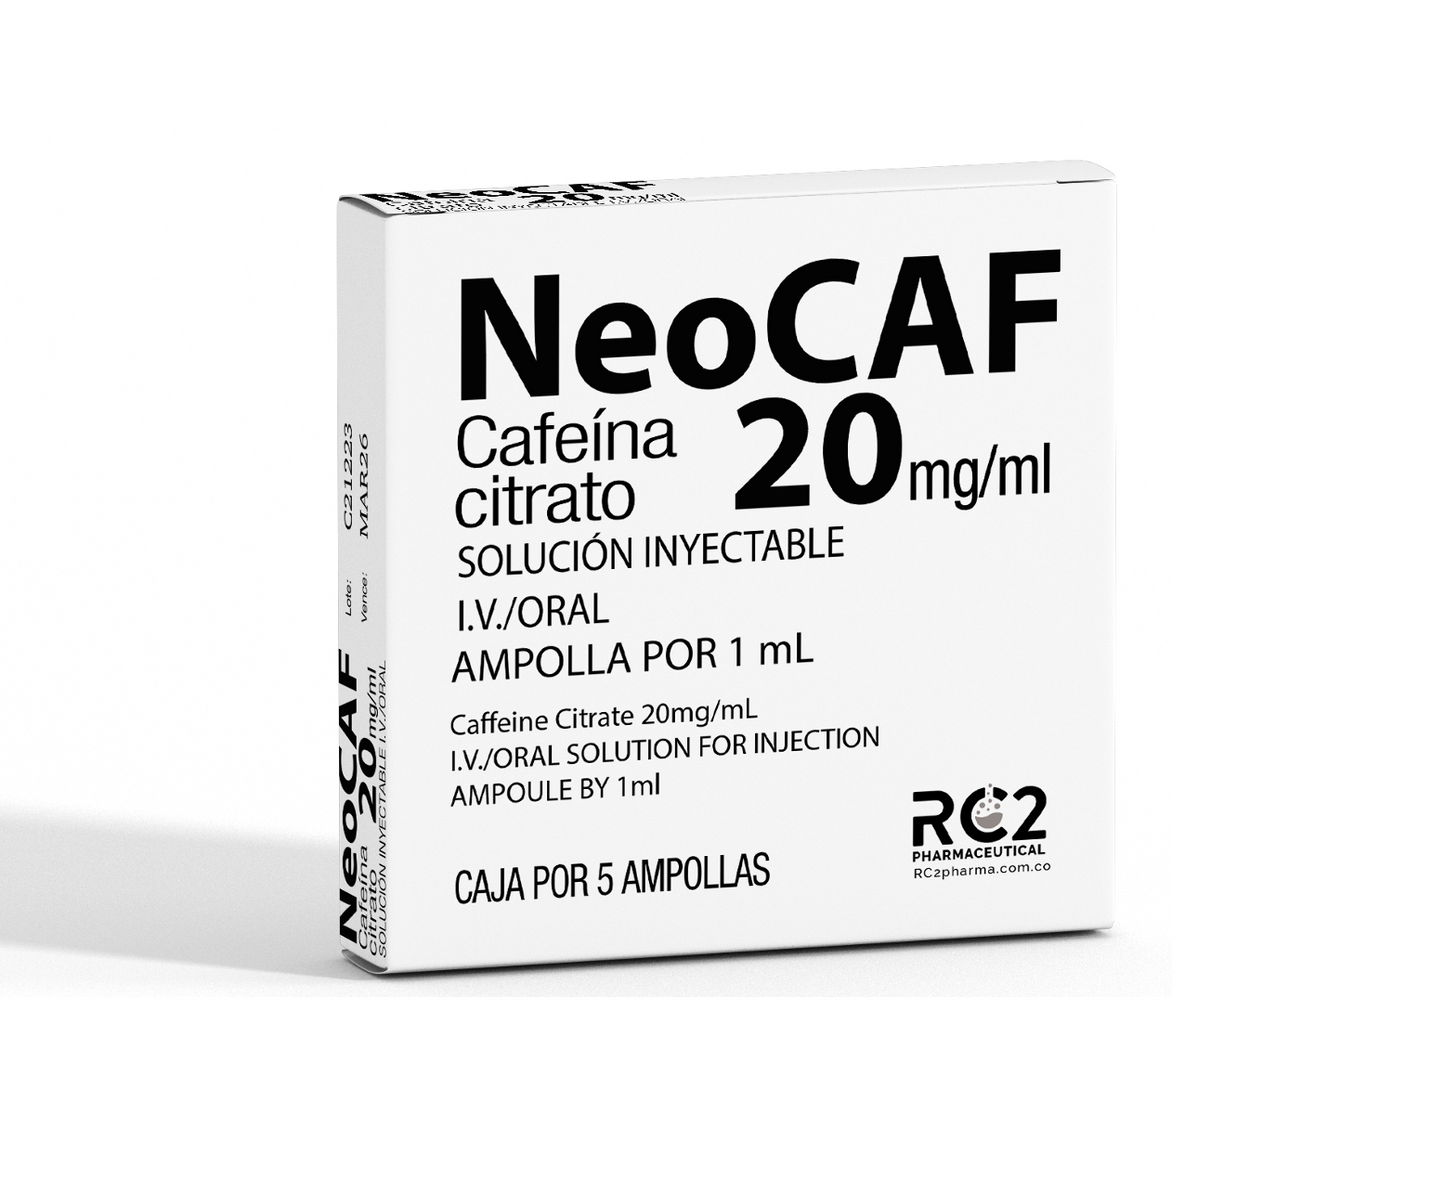 NeoCAF Cafeina Citrato